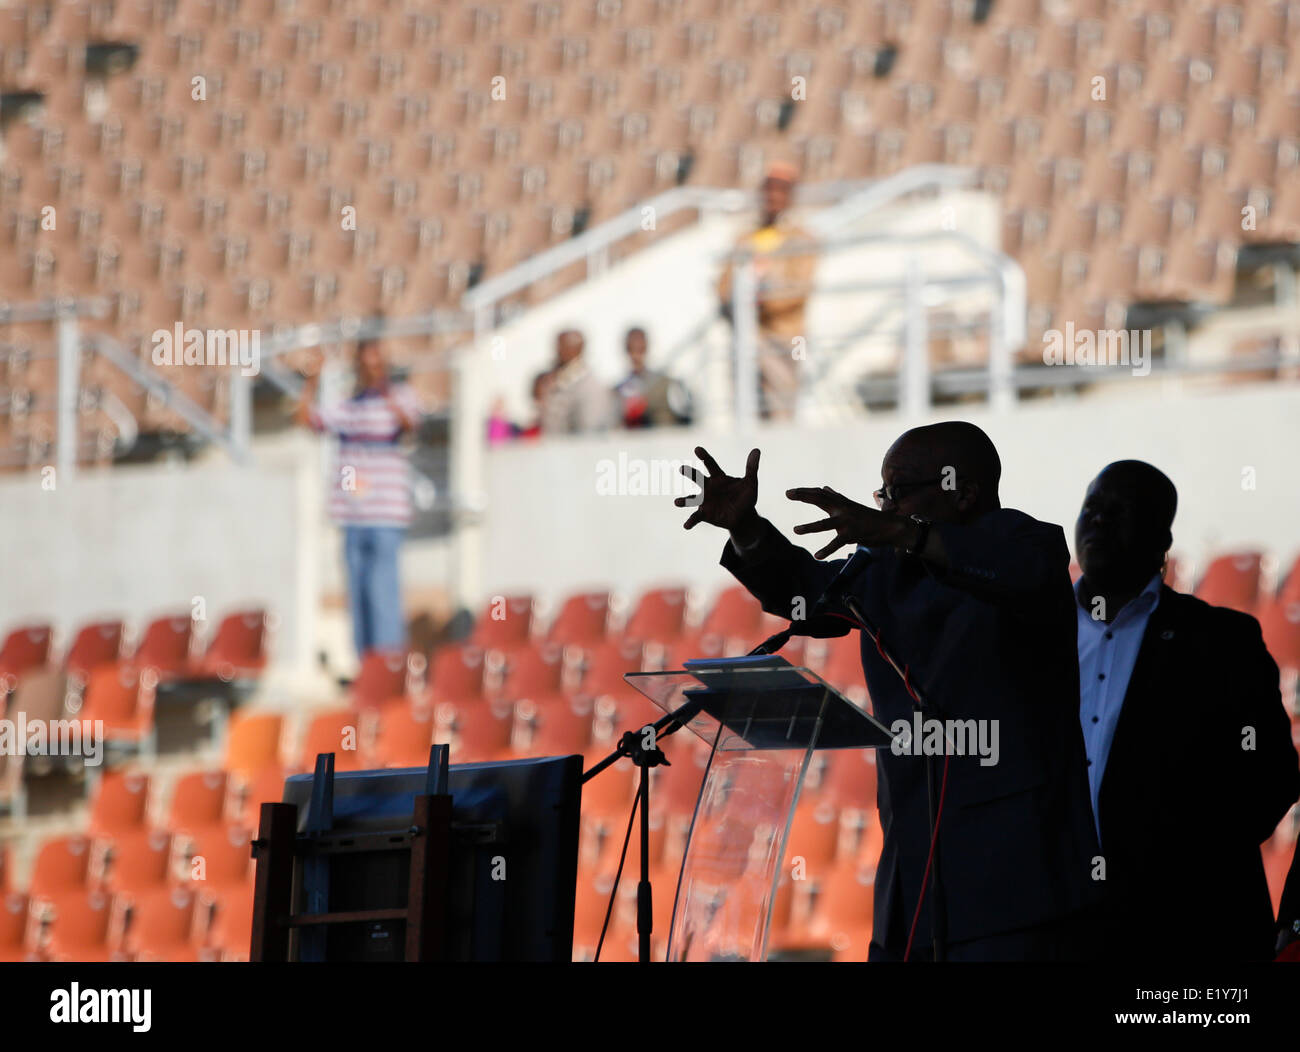 President Zuma addresses the crowd at the COSATU/ANC May Day celebrations at Peter Mokaba stadium, Polokwane on 1 May 2014. Stock Photo